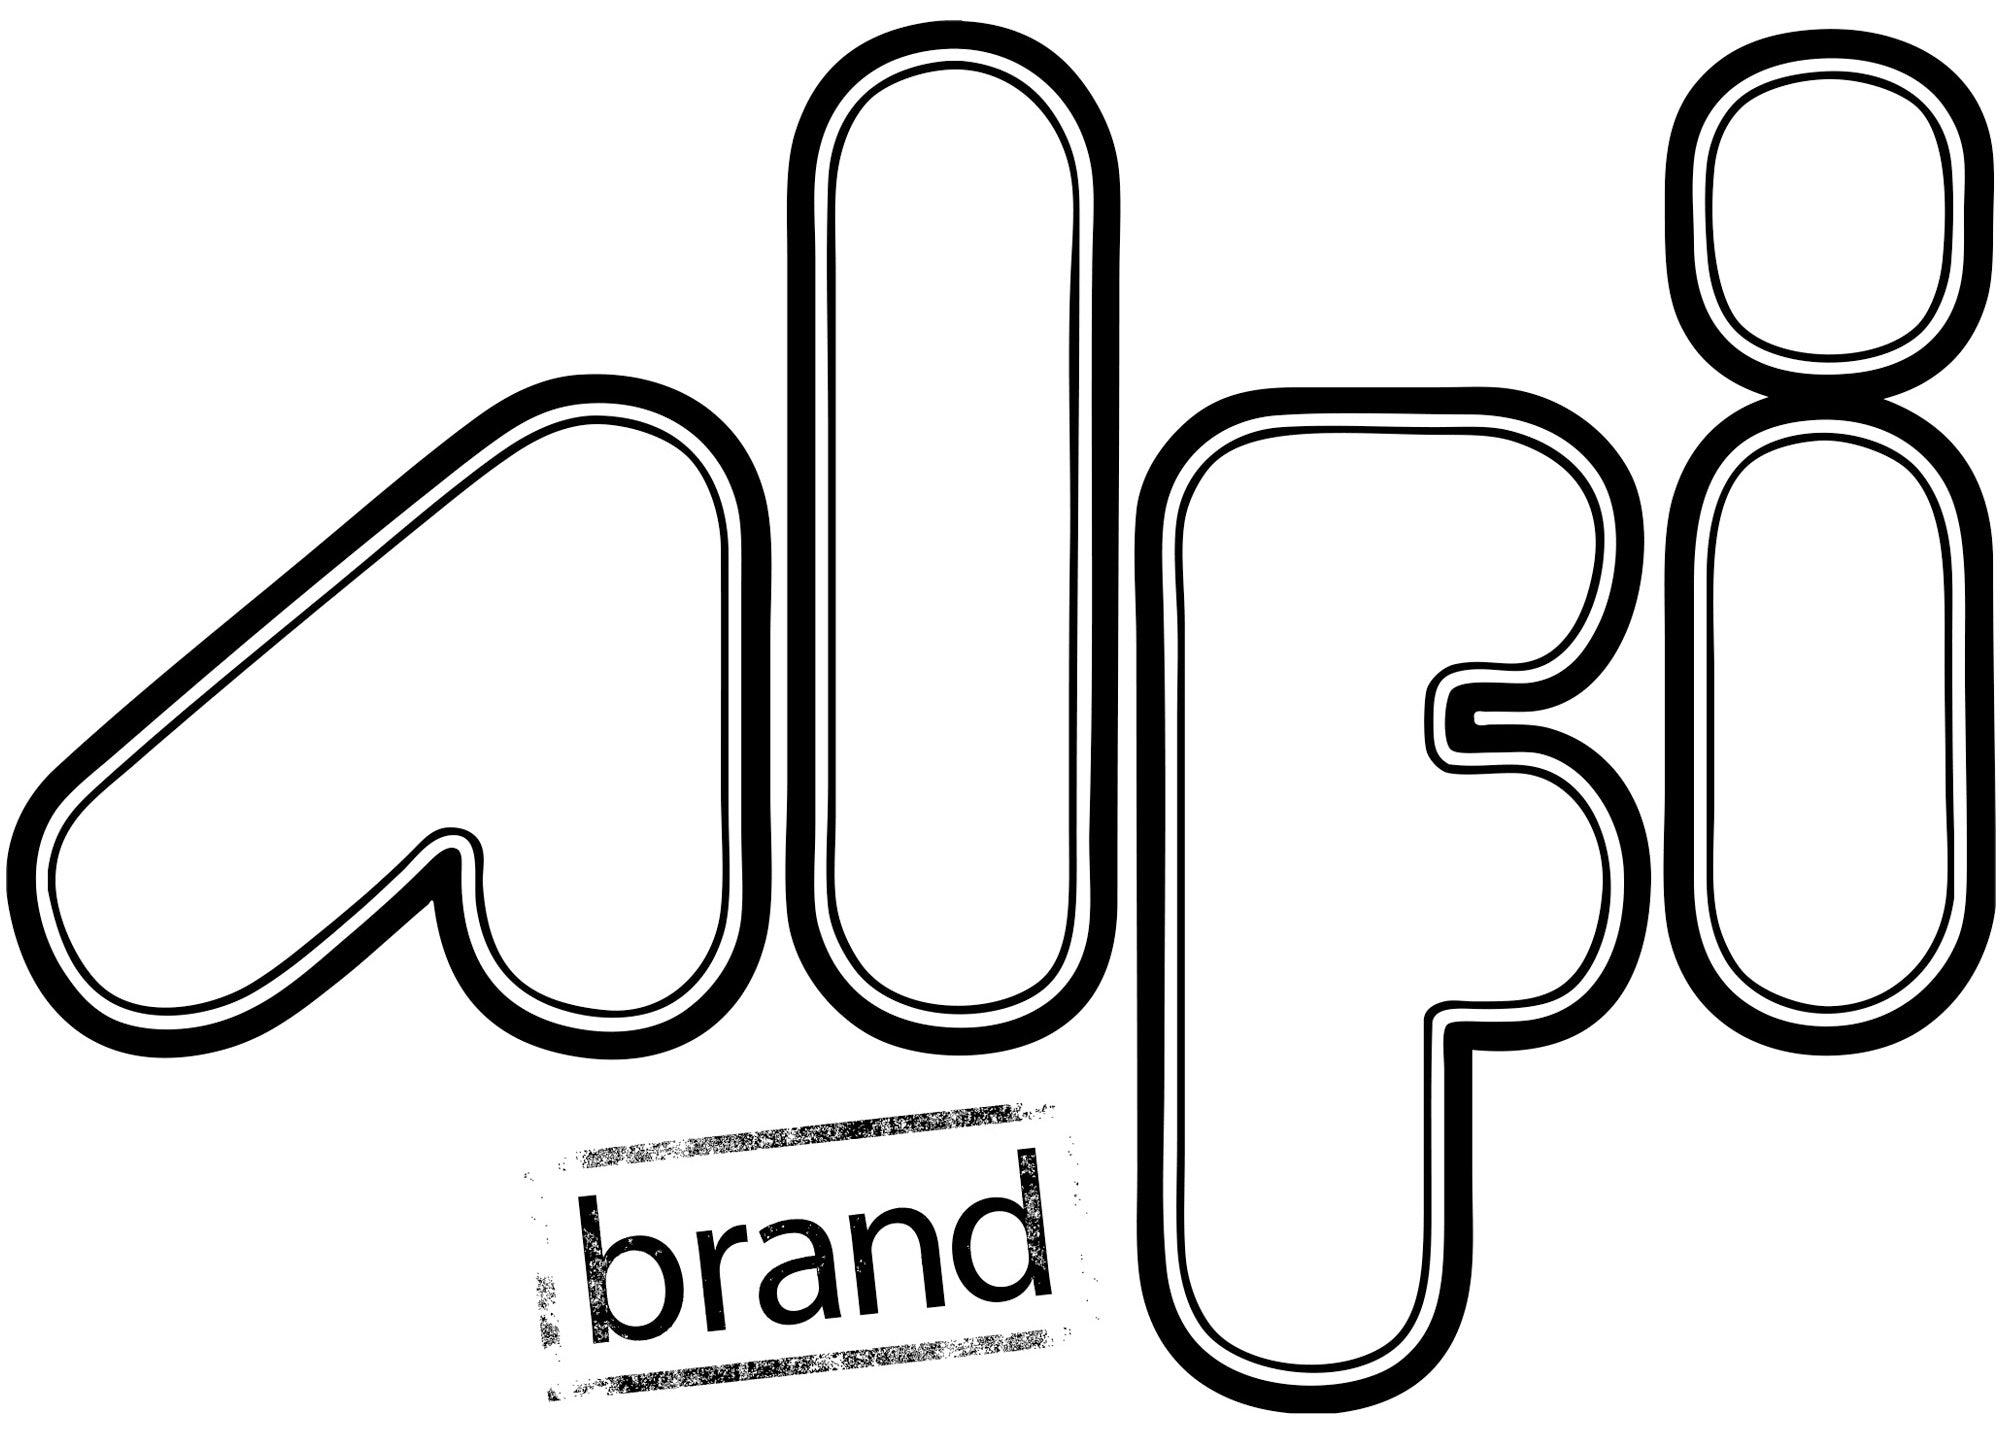 ALFI Brand - Polished Chrome Wallmounted Tub Filler Bathroom Spout | AB9201-PC